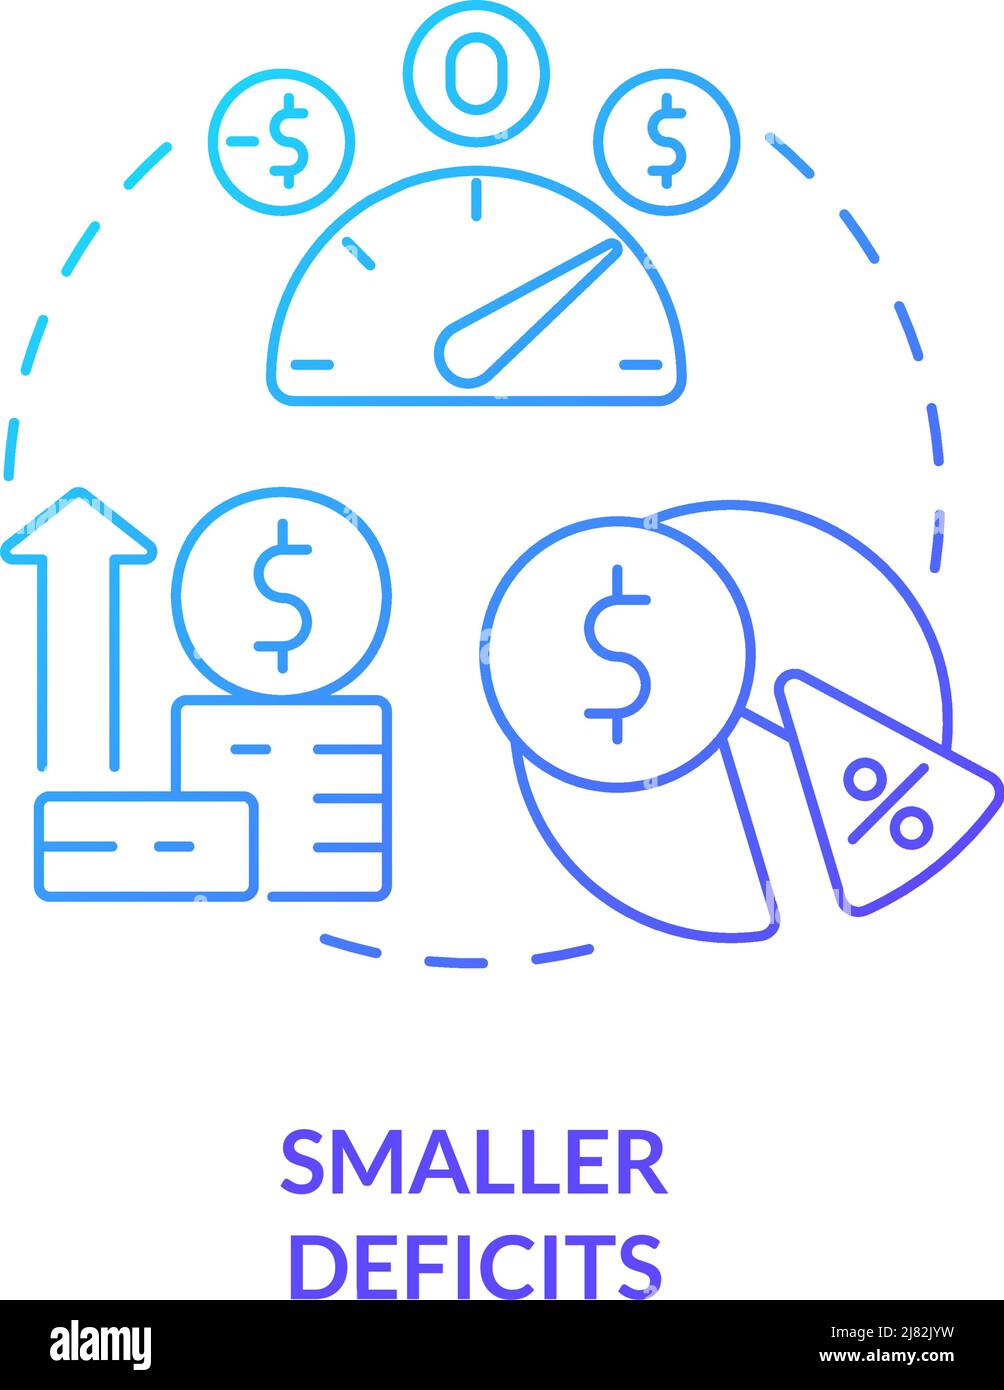 Smaller deficits blue gradient concept icon Stock Vector